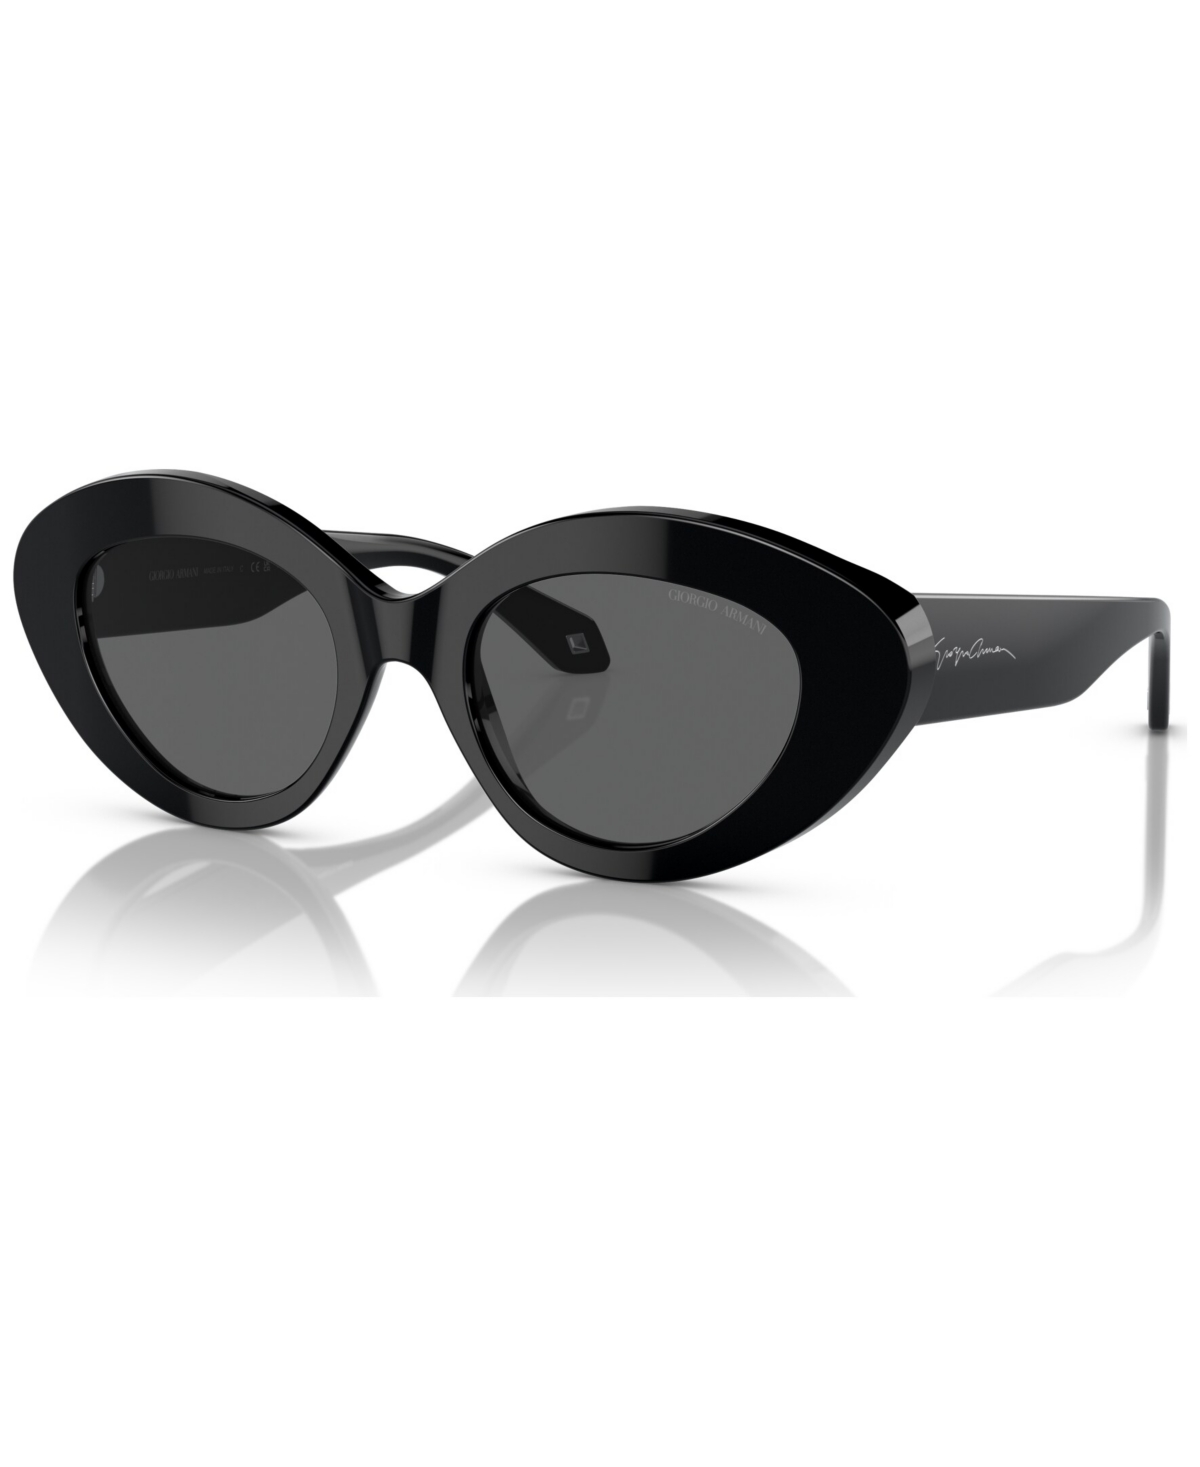 Women's Sunglasses, AR8188 - Black